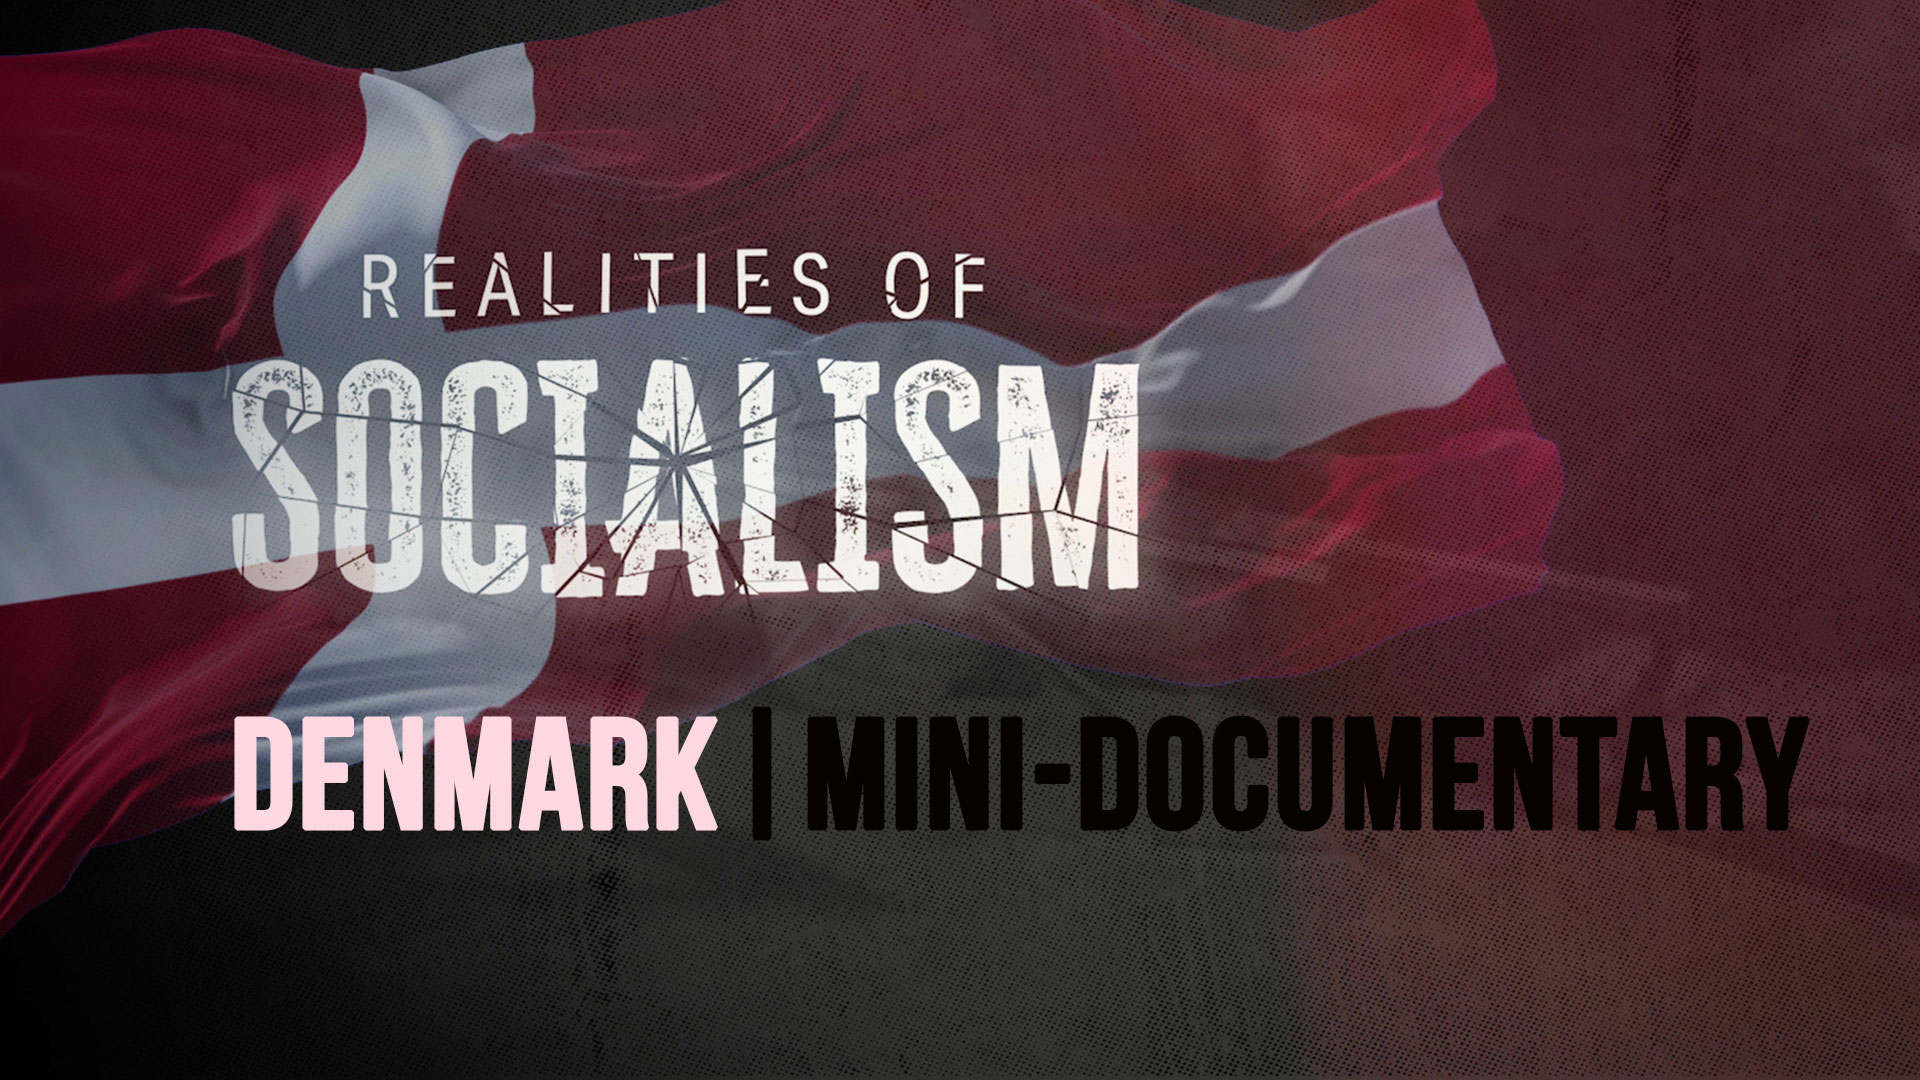 The Reality of Socialism: Denmark | Mini-Documentary